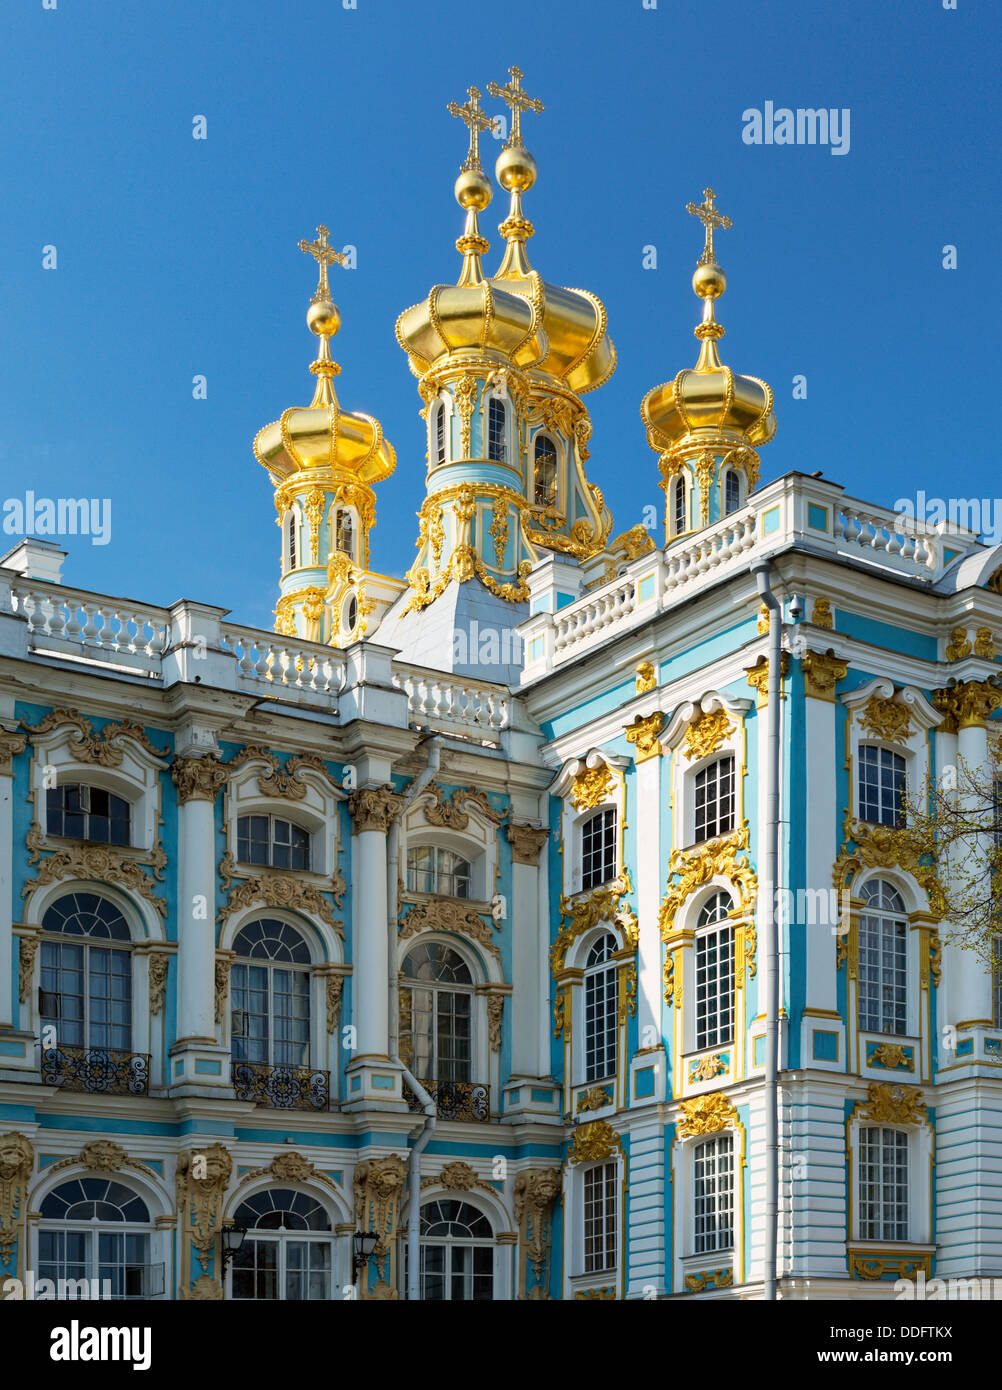 Palace Russland Catherine Architektur Gebäude gold Petersburg st. Reiseziele Stil barocke berühmte blaue Villa Chur Stockfoto